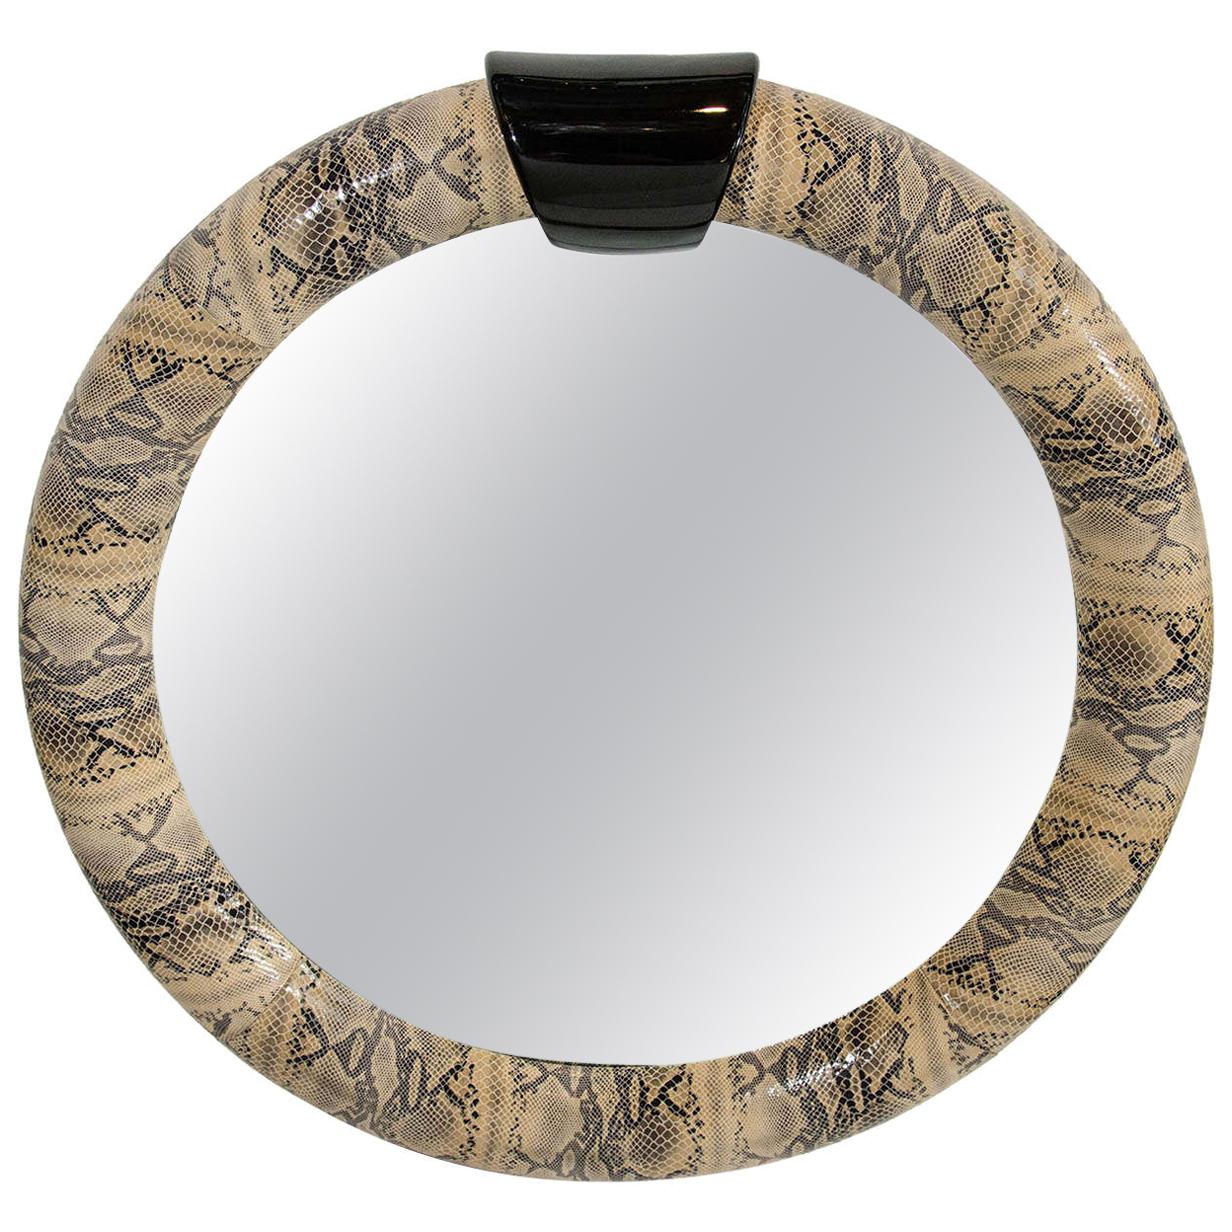 Зеркала кавер. Змейка с зеркалом. Jeton Snake Mirror. Historical circle Mirror Table.